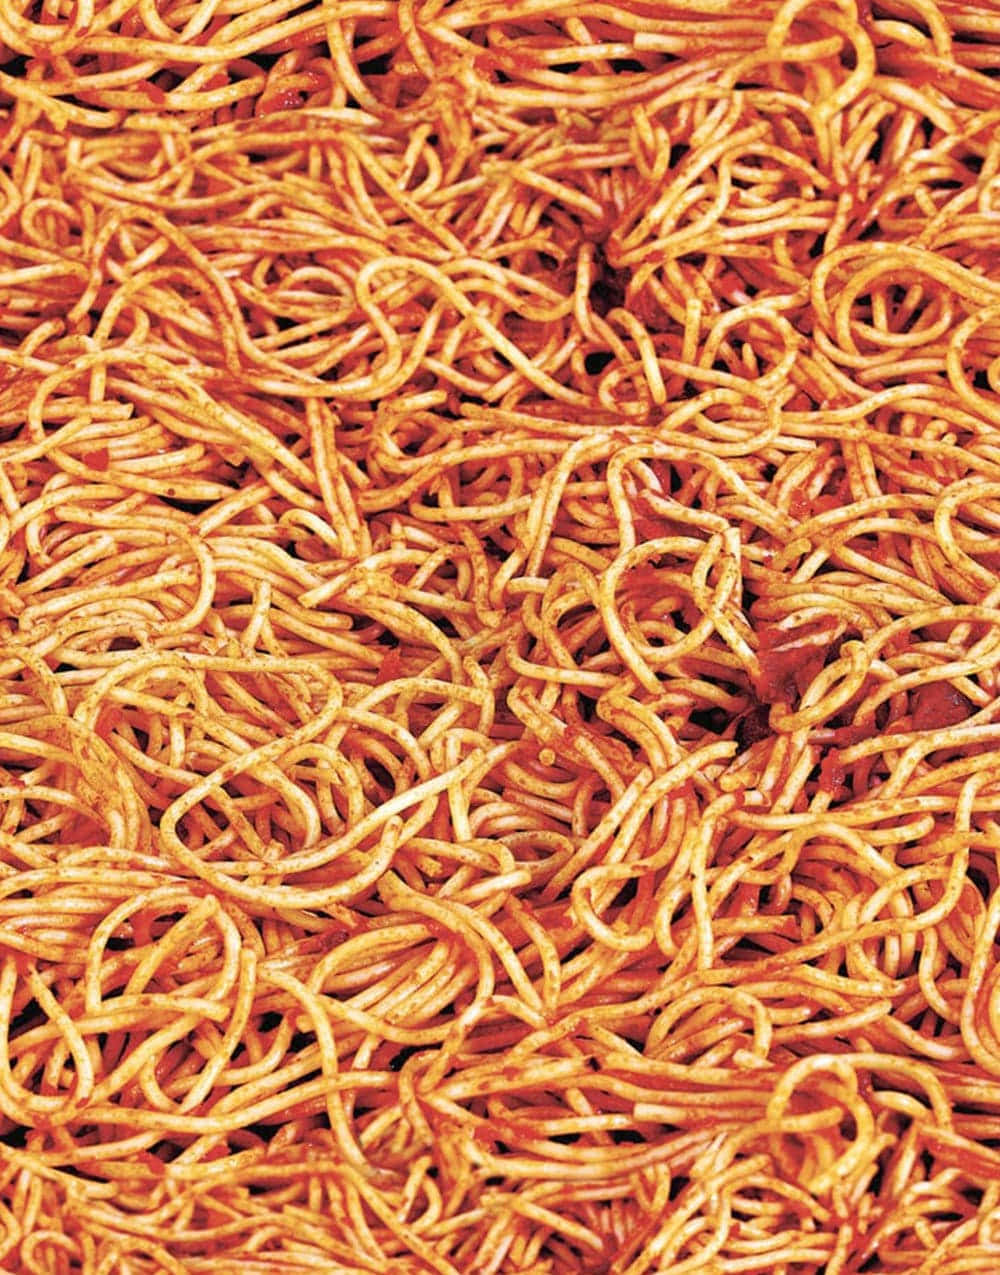 Download Luscious Mouthwatering Spaghetti Platter Wallpaper